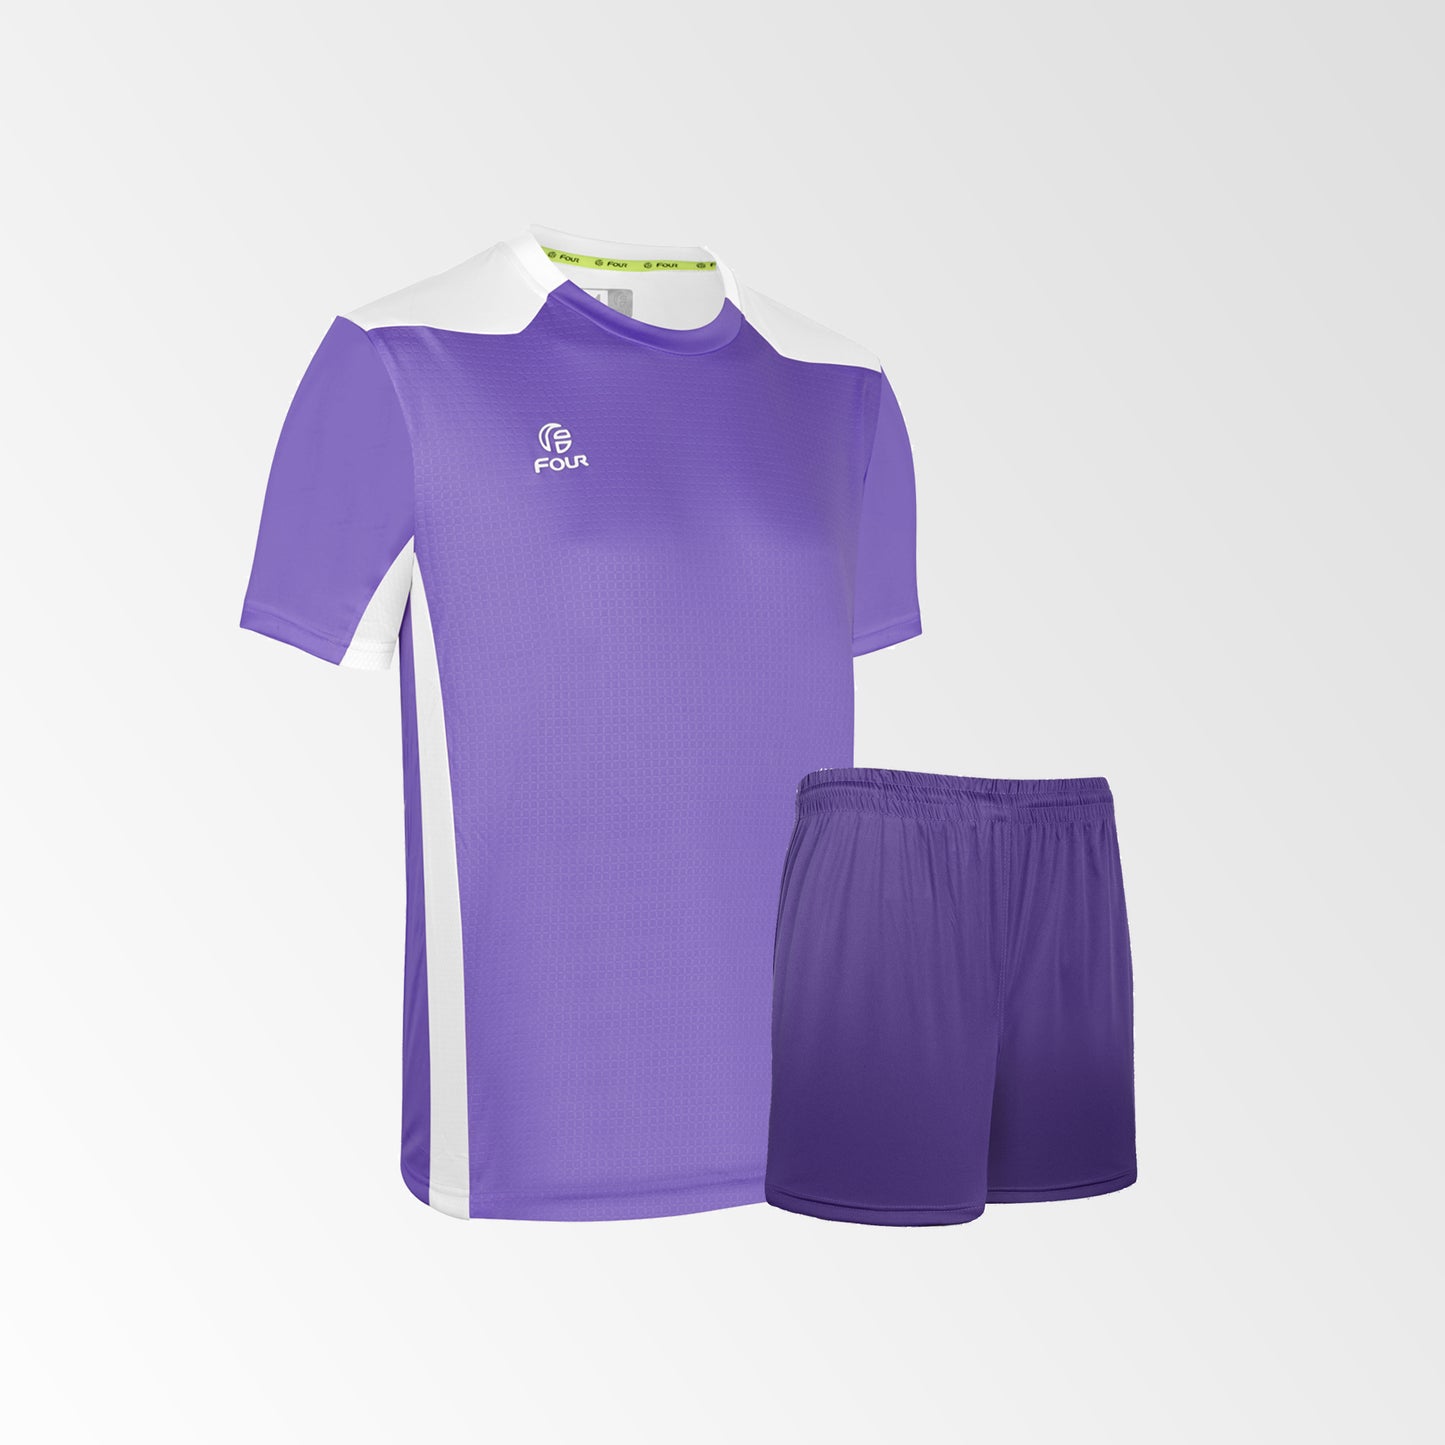 Camiseta de futbol Betis lila four